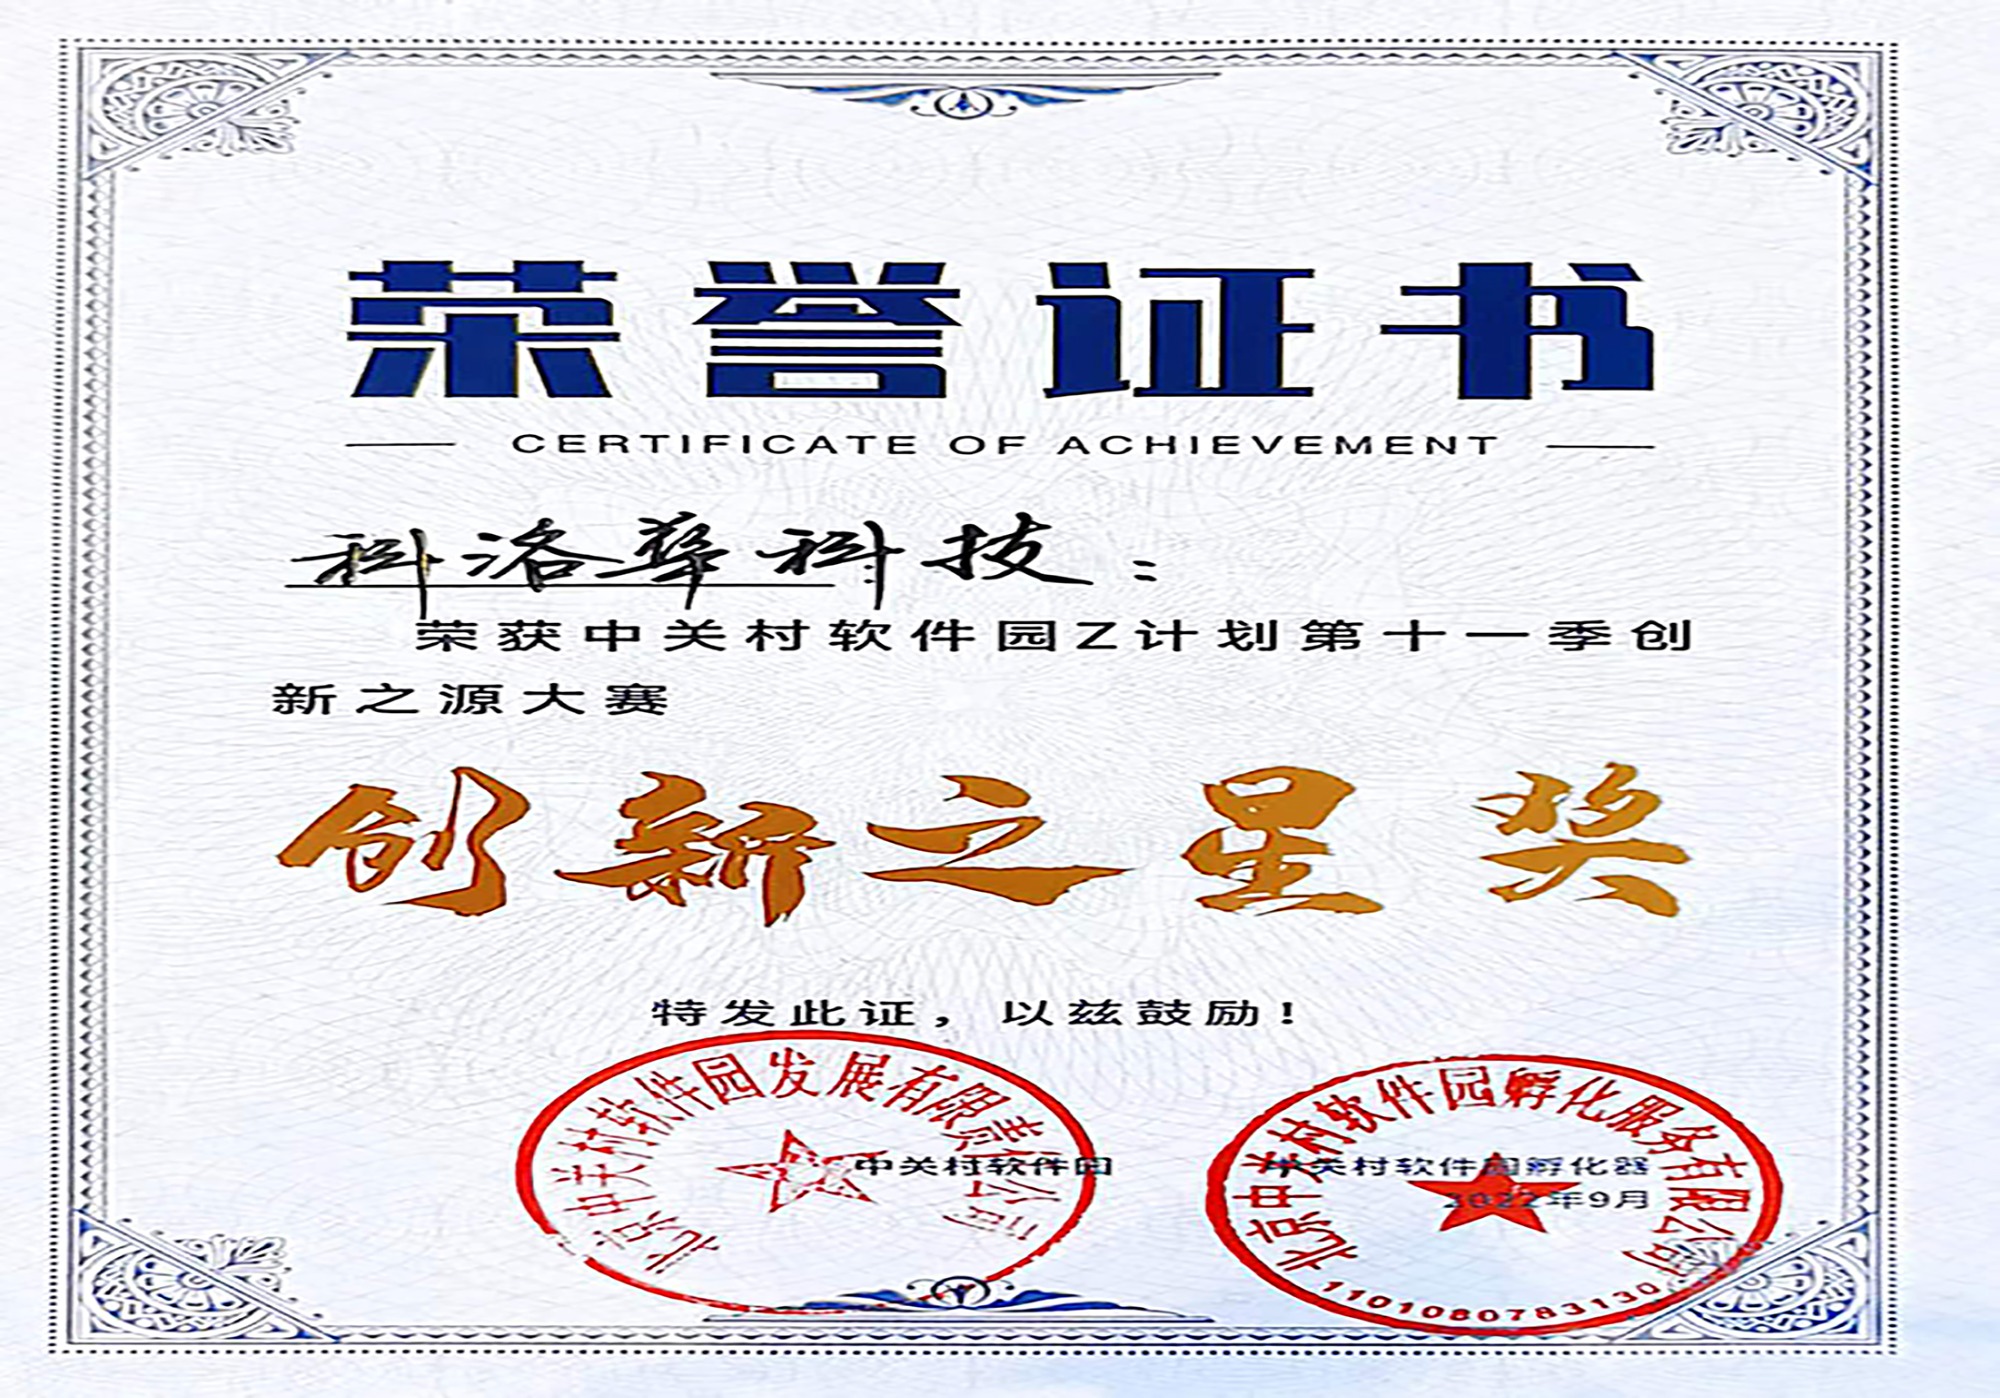 Beijing Conona Technology won the "Zhongguancun Software Park Z Plan 11th Season Innovation Source Competition - Innovation Star Award"